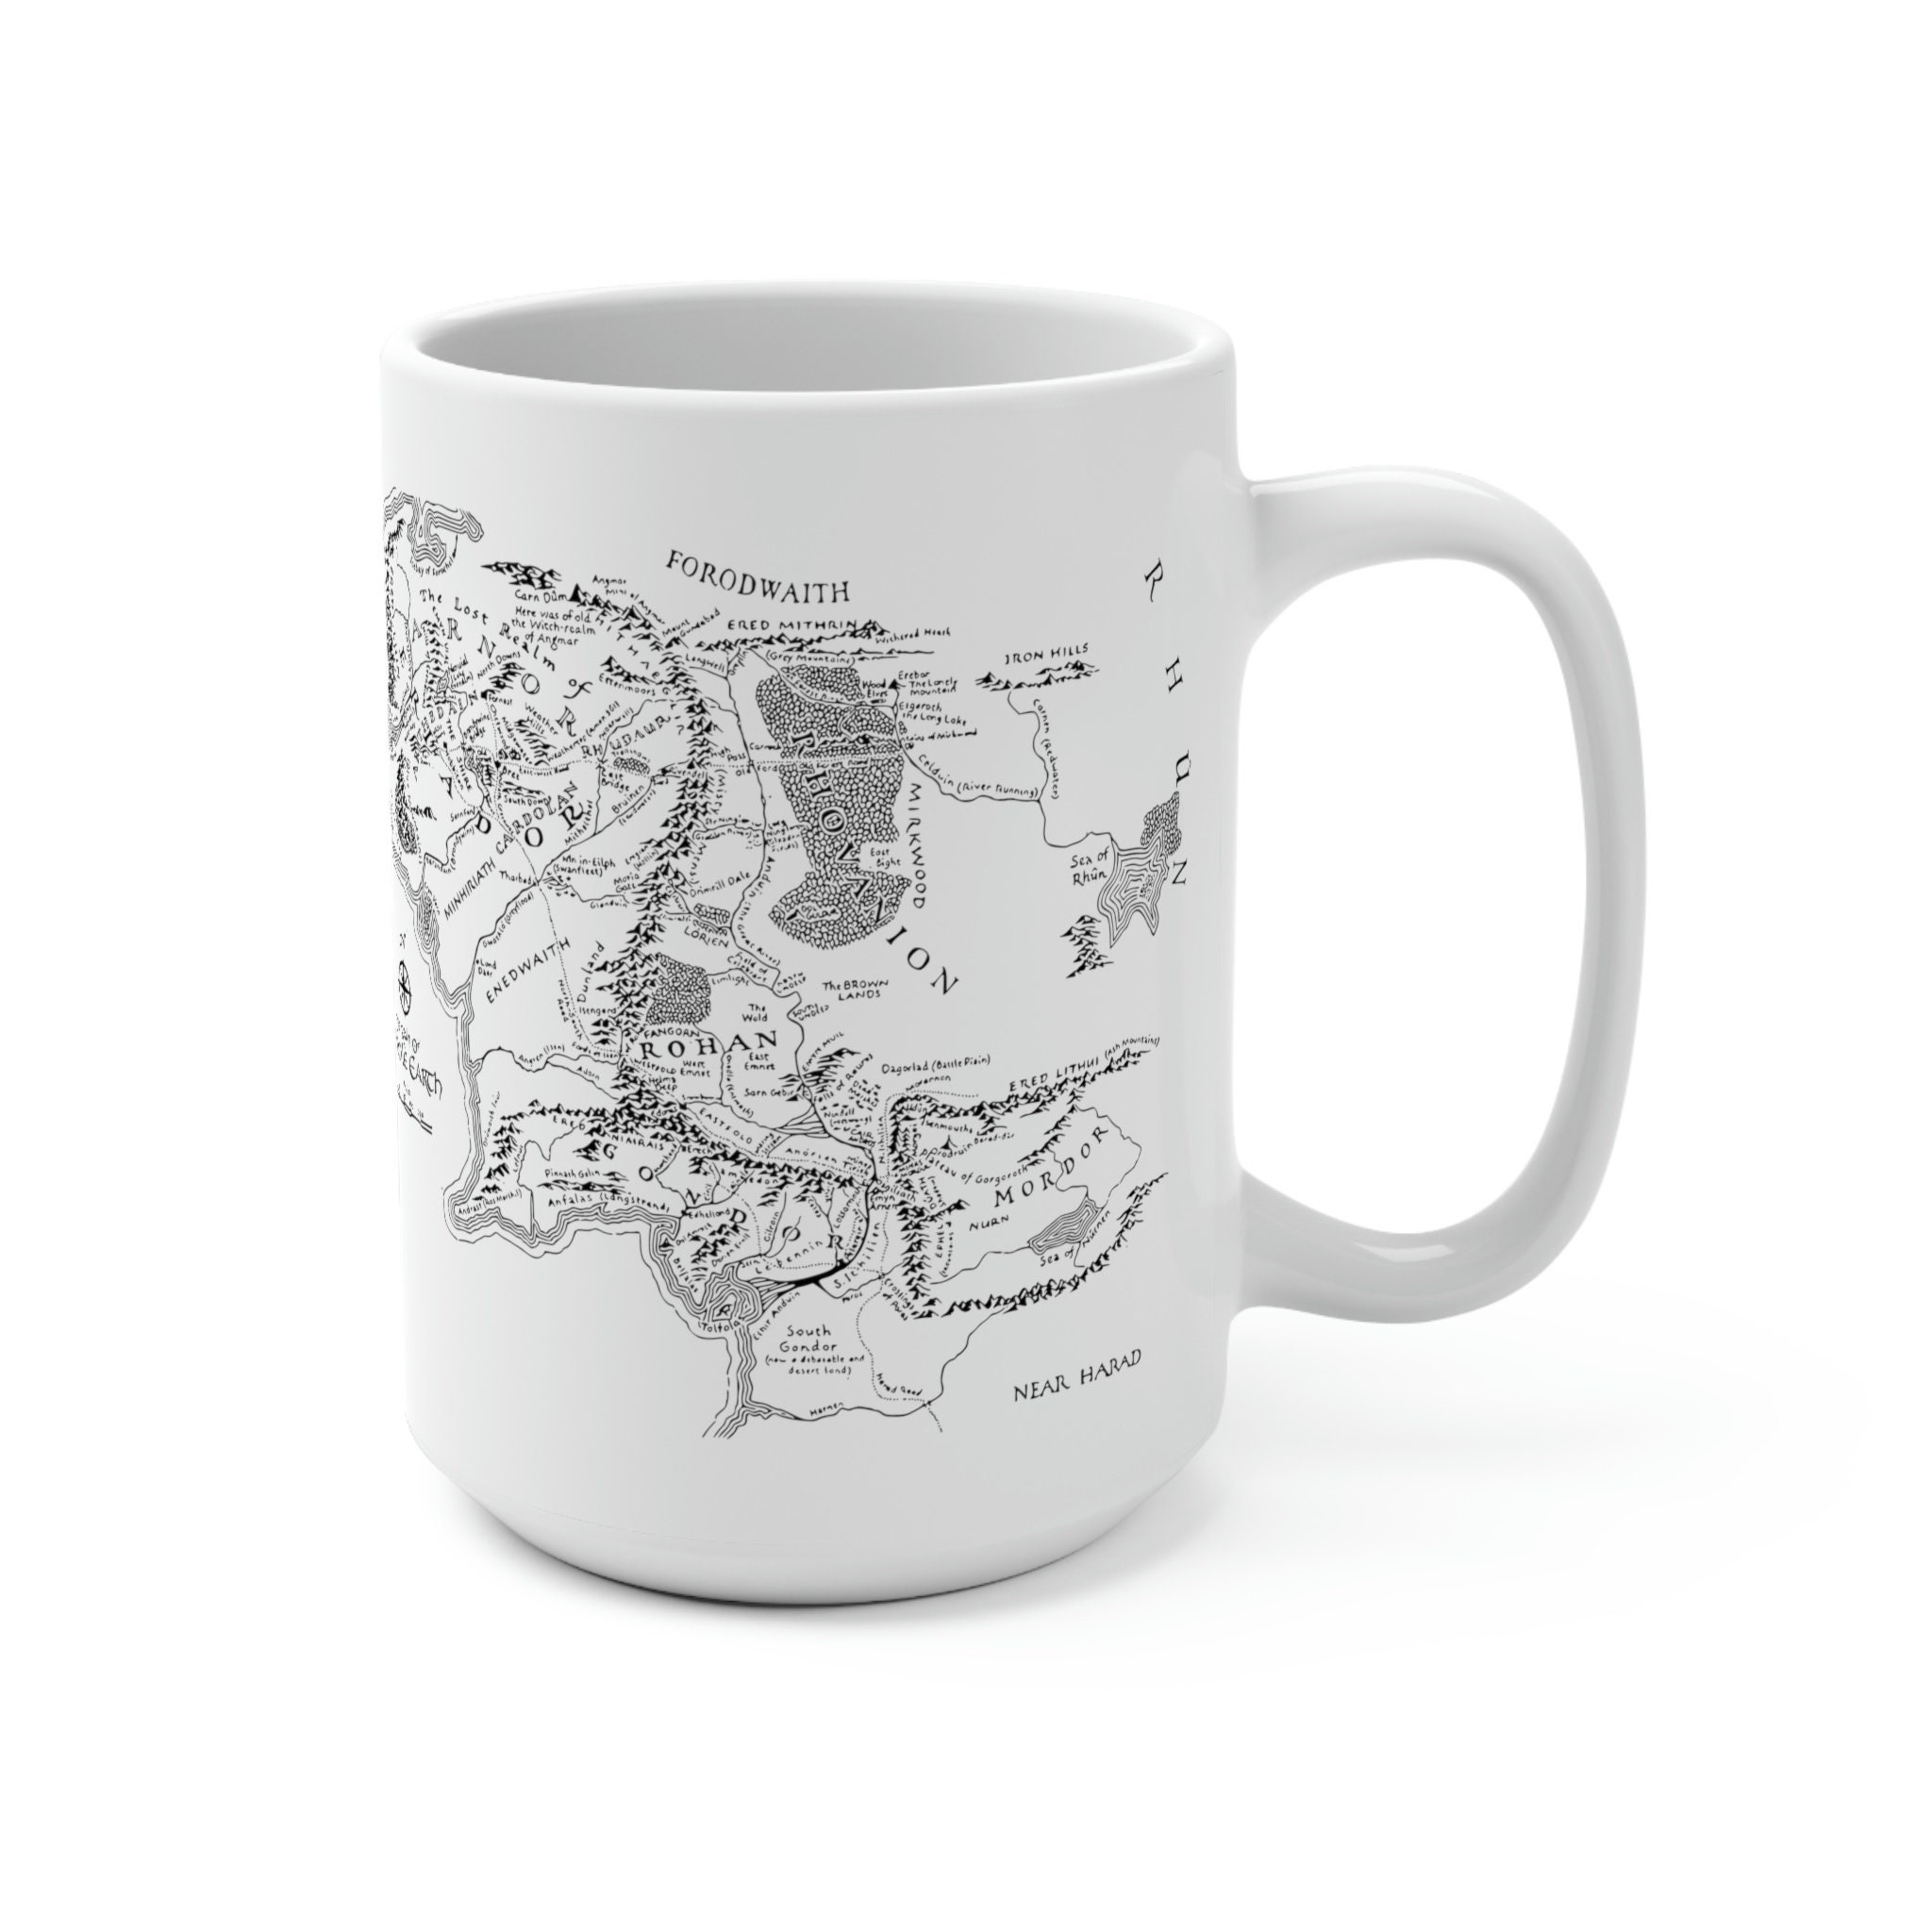 Second Breakfast Club Coffee Mug, Hobbit, LOTR, Gifts for Geeks